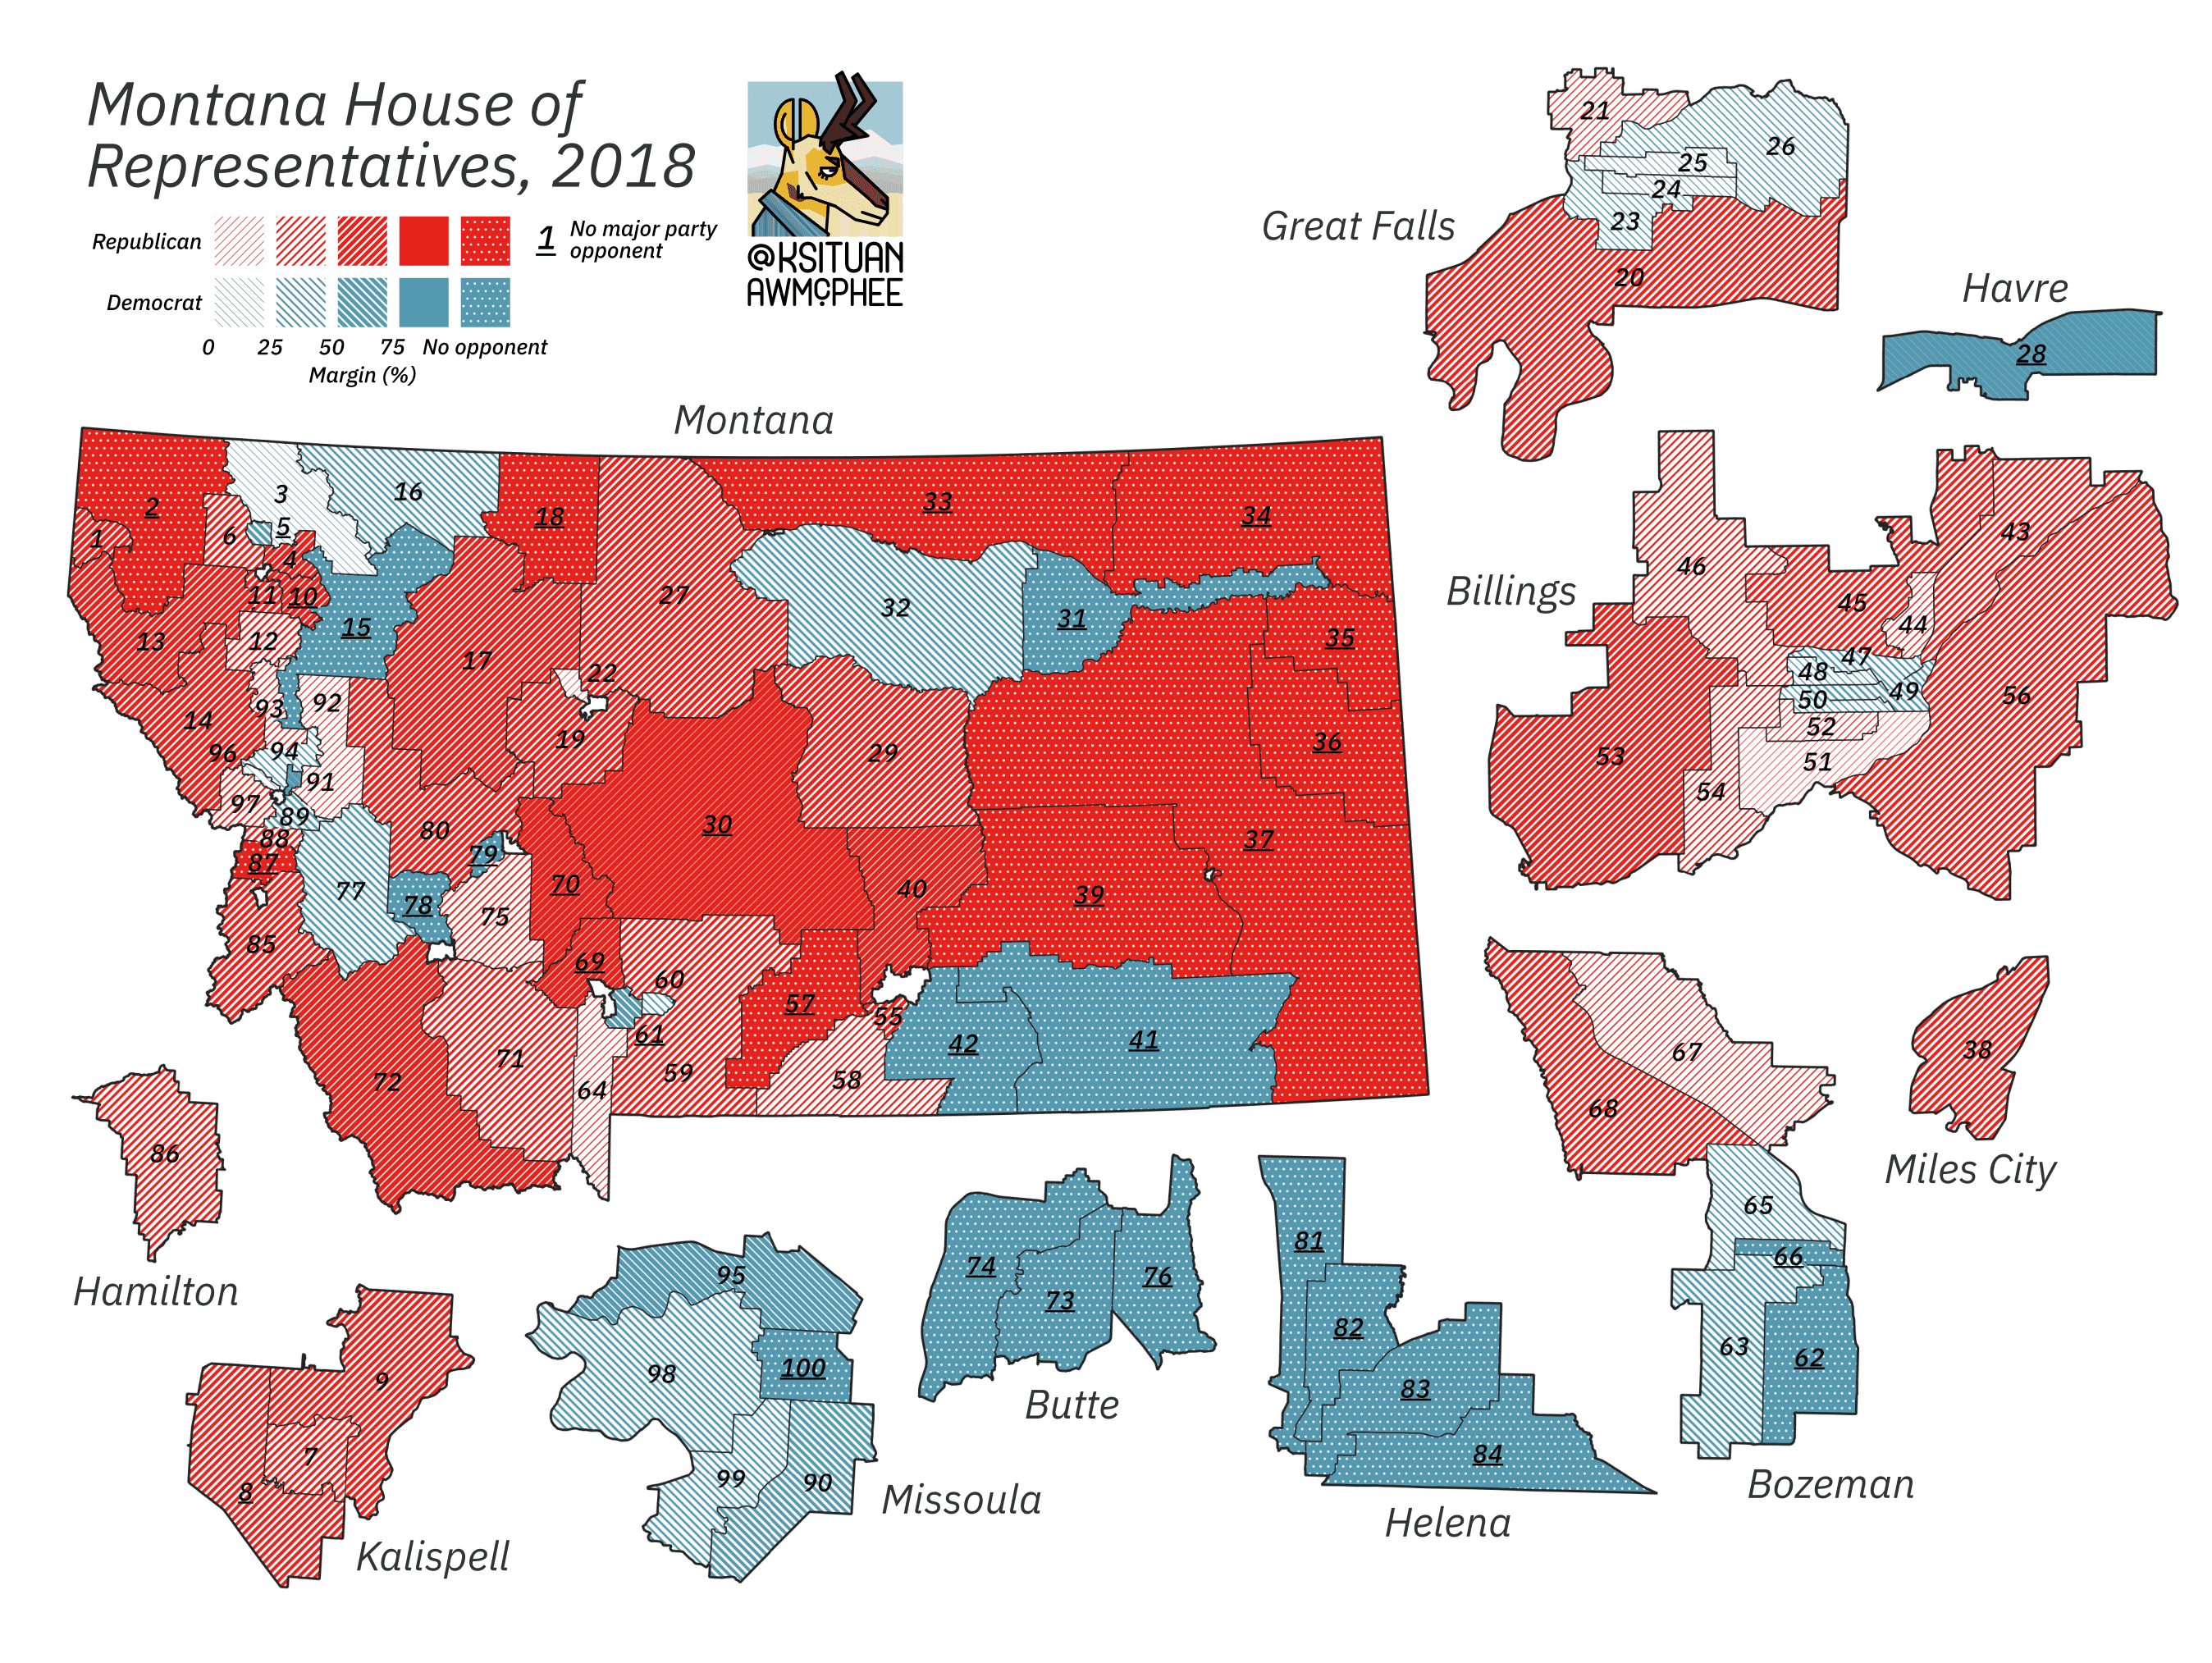 A political map of Montana.